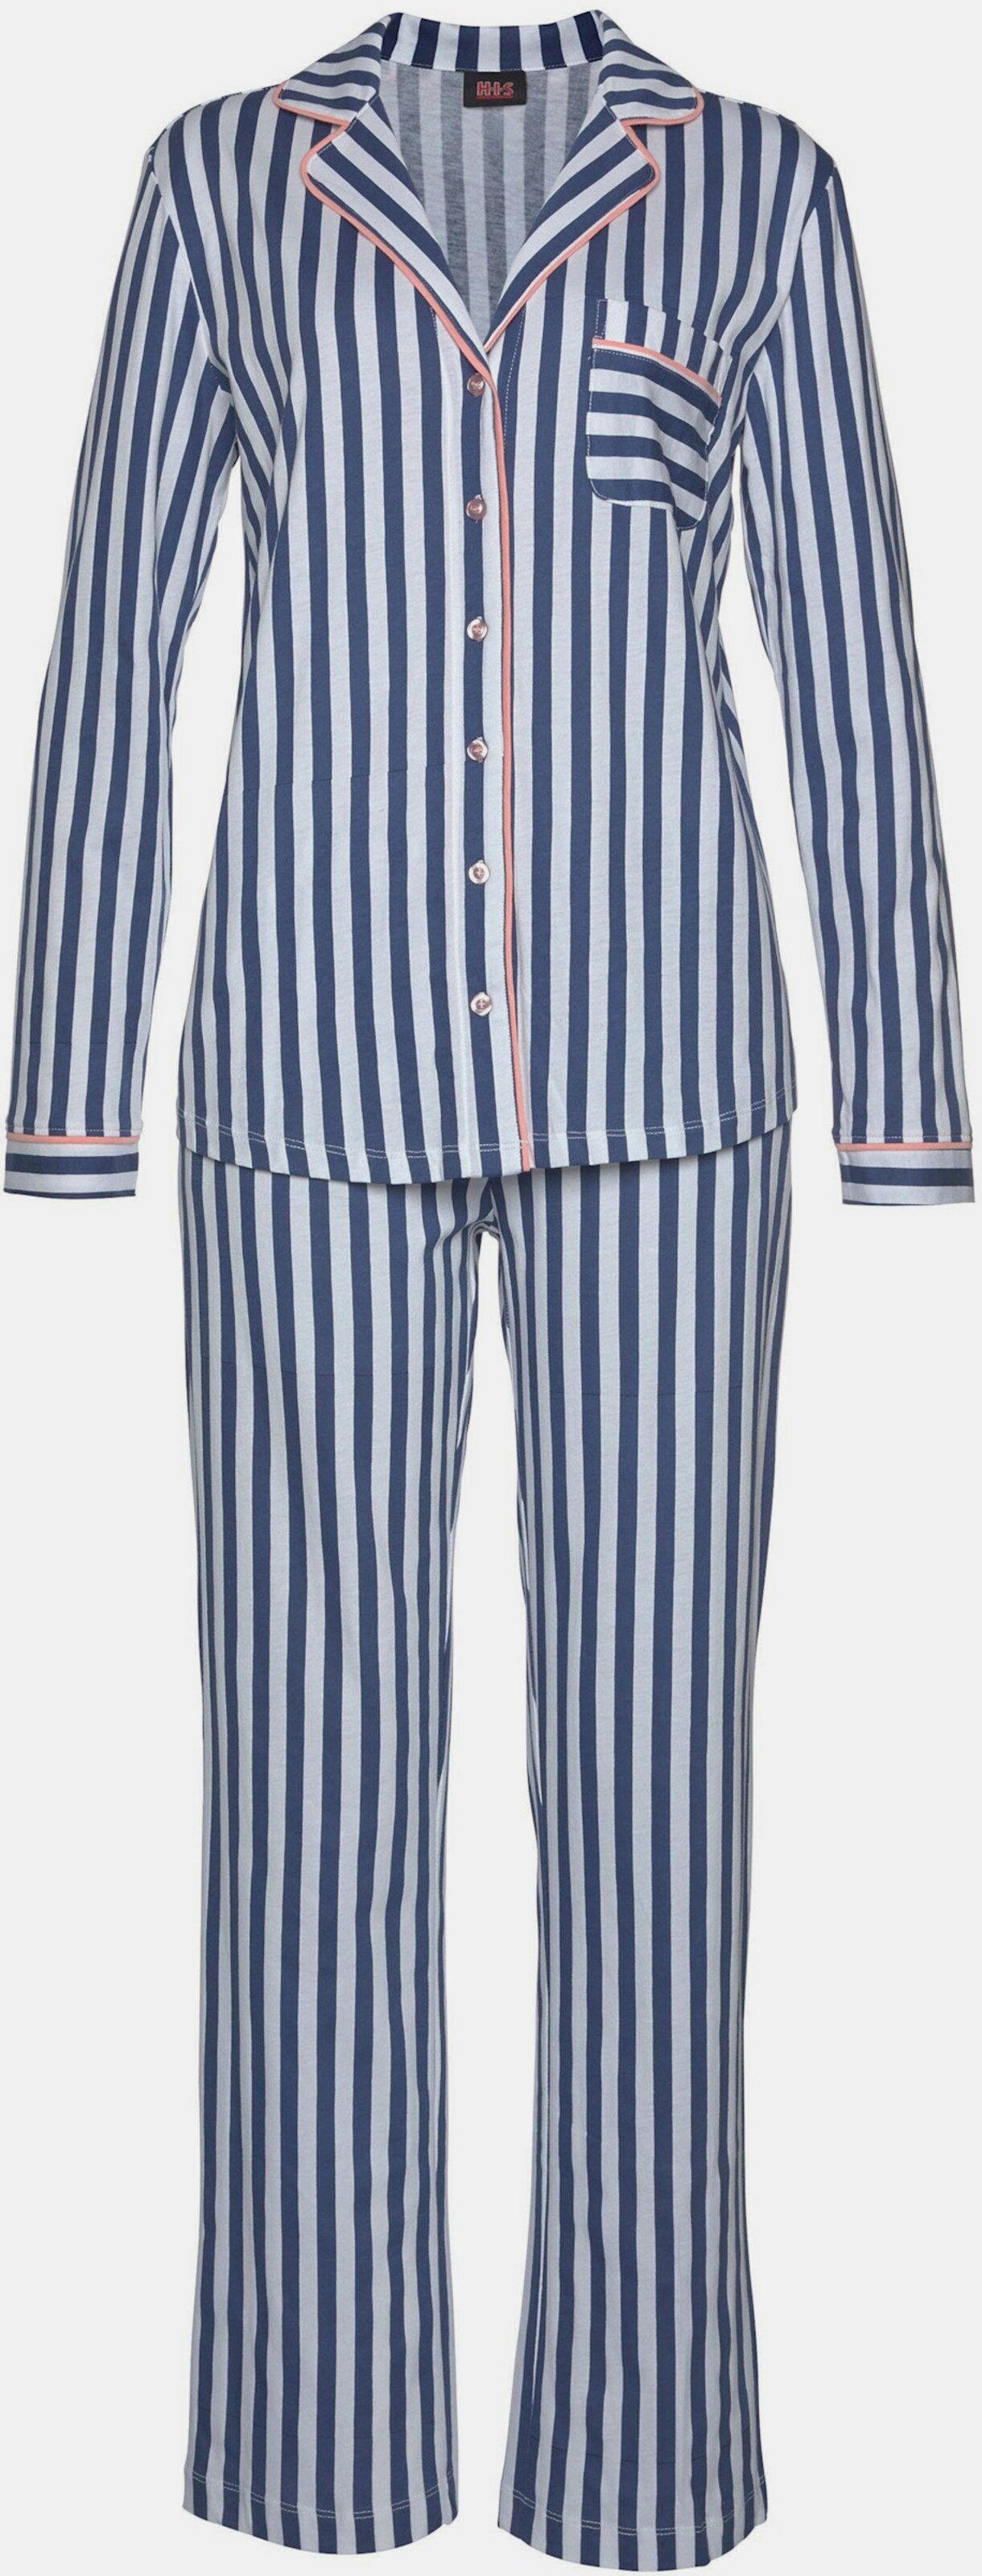 H.I.S Pyjama - dunkelblau-weiß-gestreift